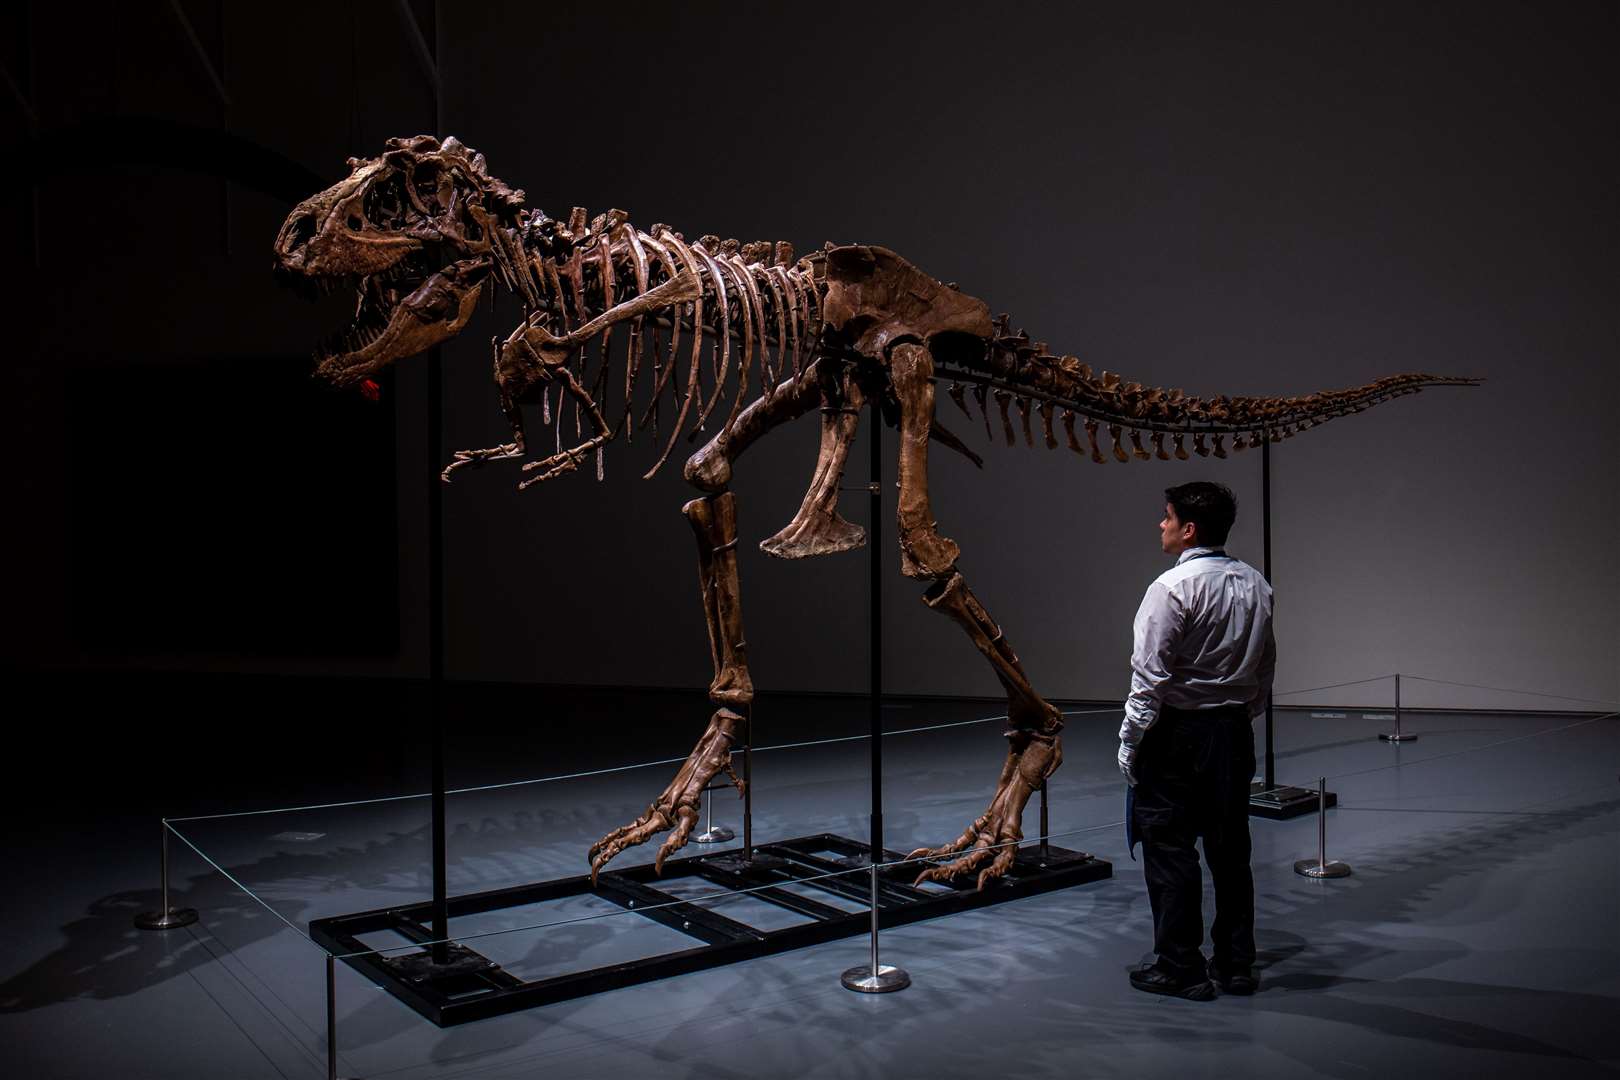 The Gorgosaurus dinosaur measures nearly 10 feet tall and 22 feet long. (Sotheby’s/PA)